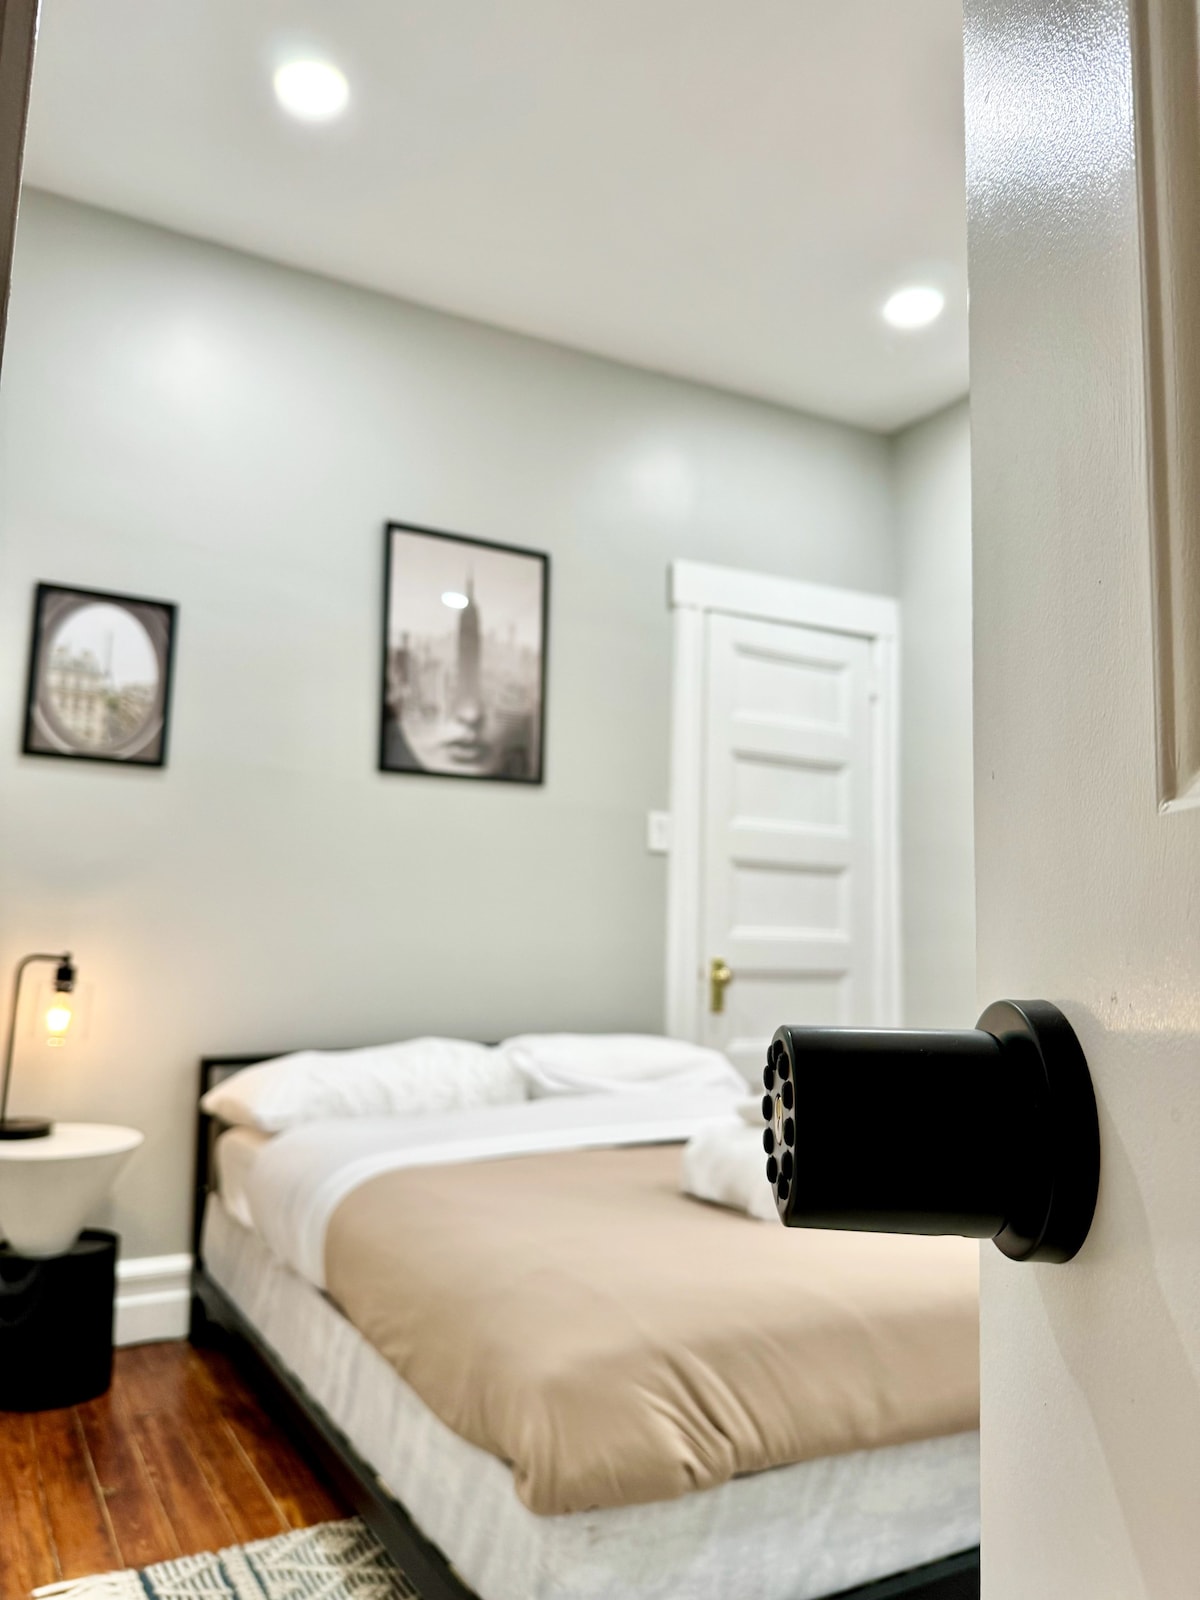 Private Bedroom Near NYC & Light Rail